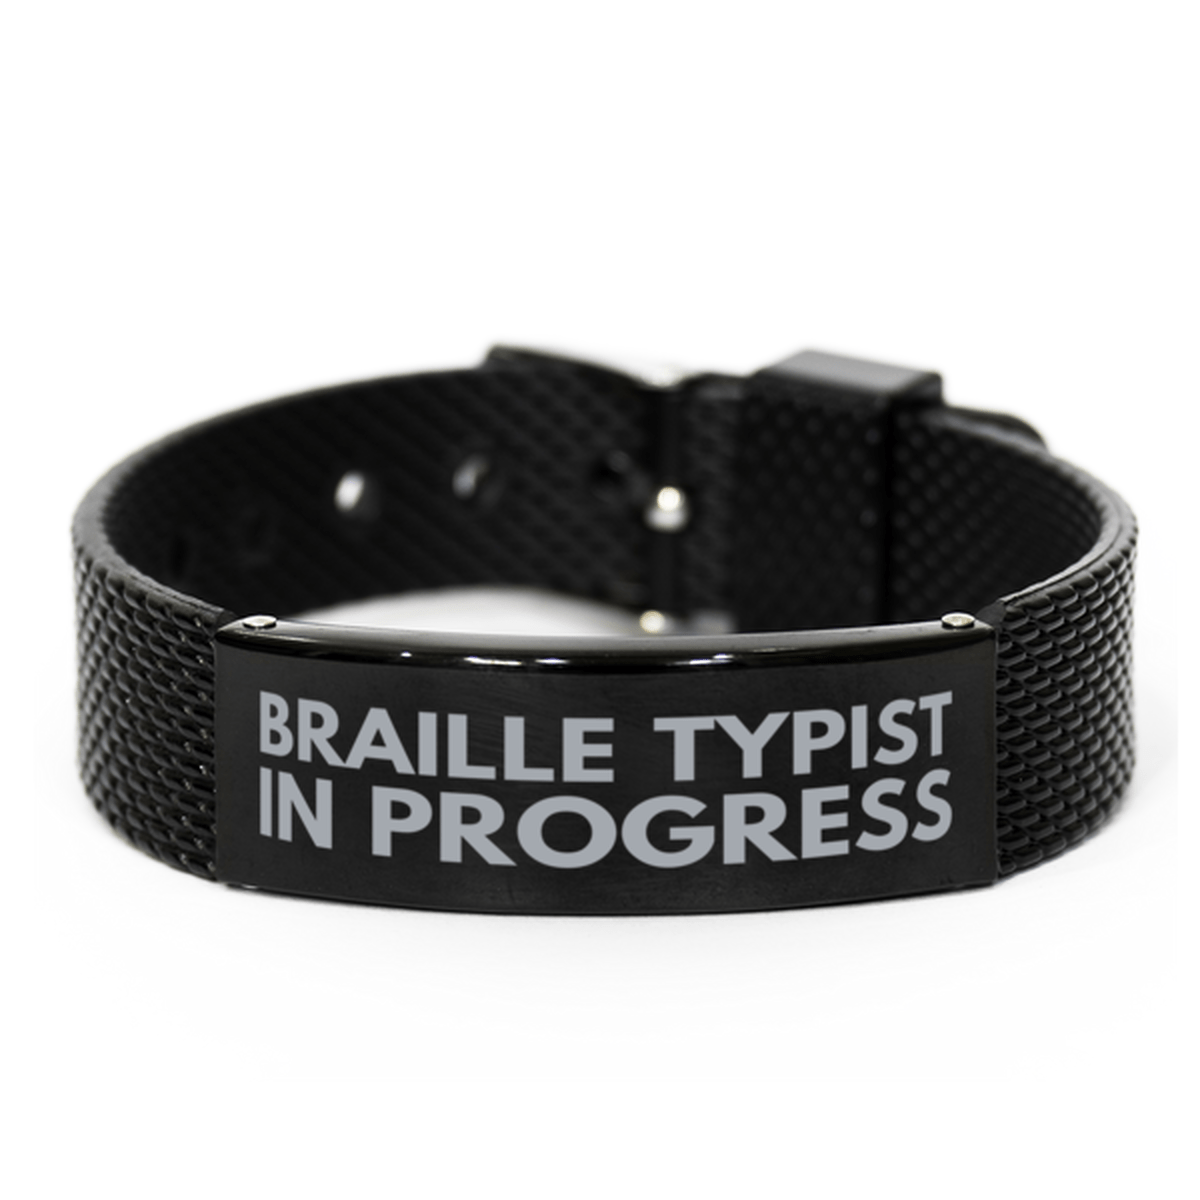 Inspirational Braille Typist Black Shark Mesh Bracelet, Braille Typist In Progress, Best Graduation Gifts for Students